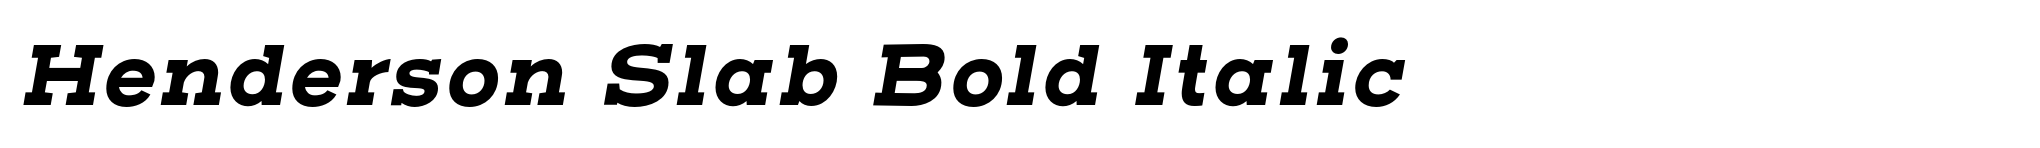 Henderson Slab Bold Italic image